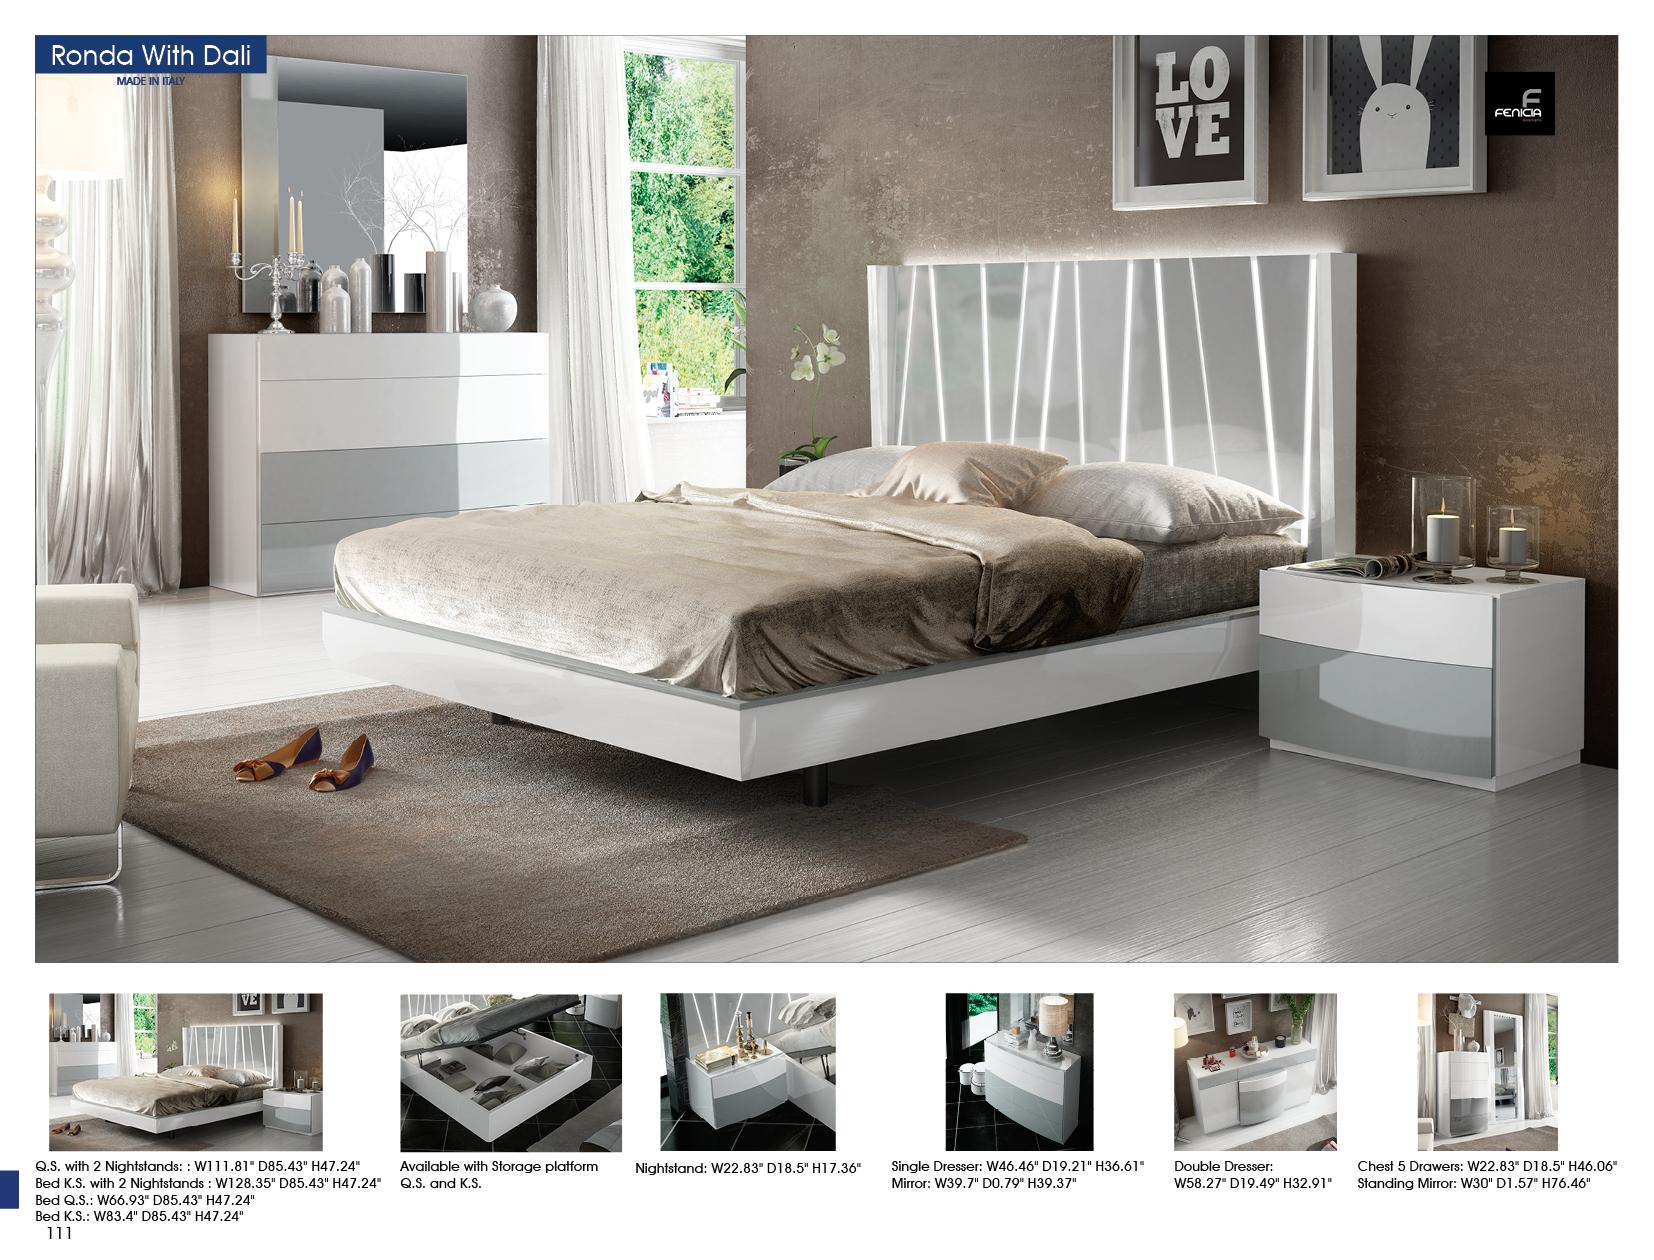 

                    
Buy White & Gray Laquer Finish King Bedroom Set 5Pcs Spain ESF Ronda DALI
